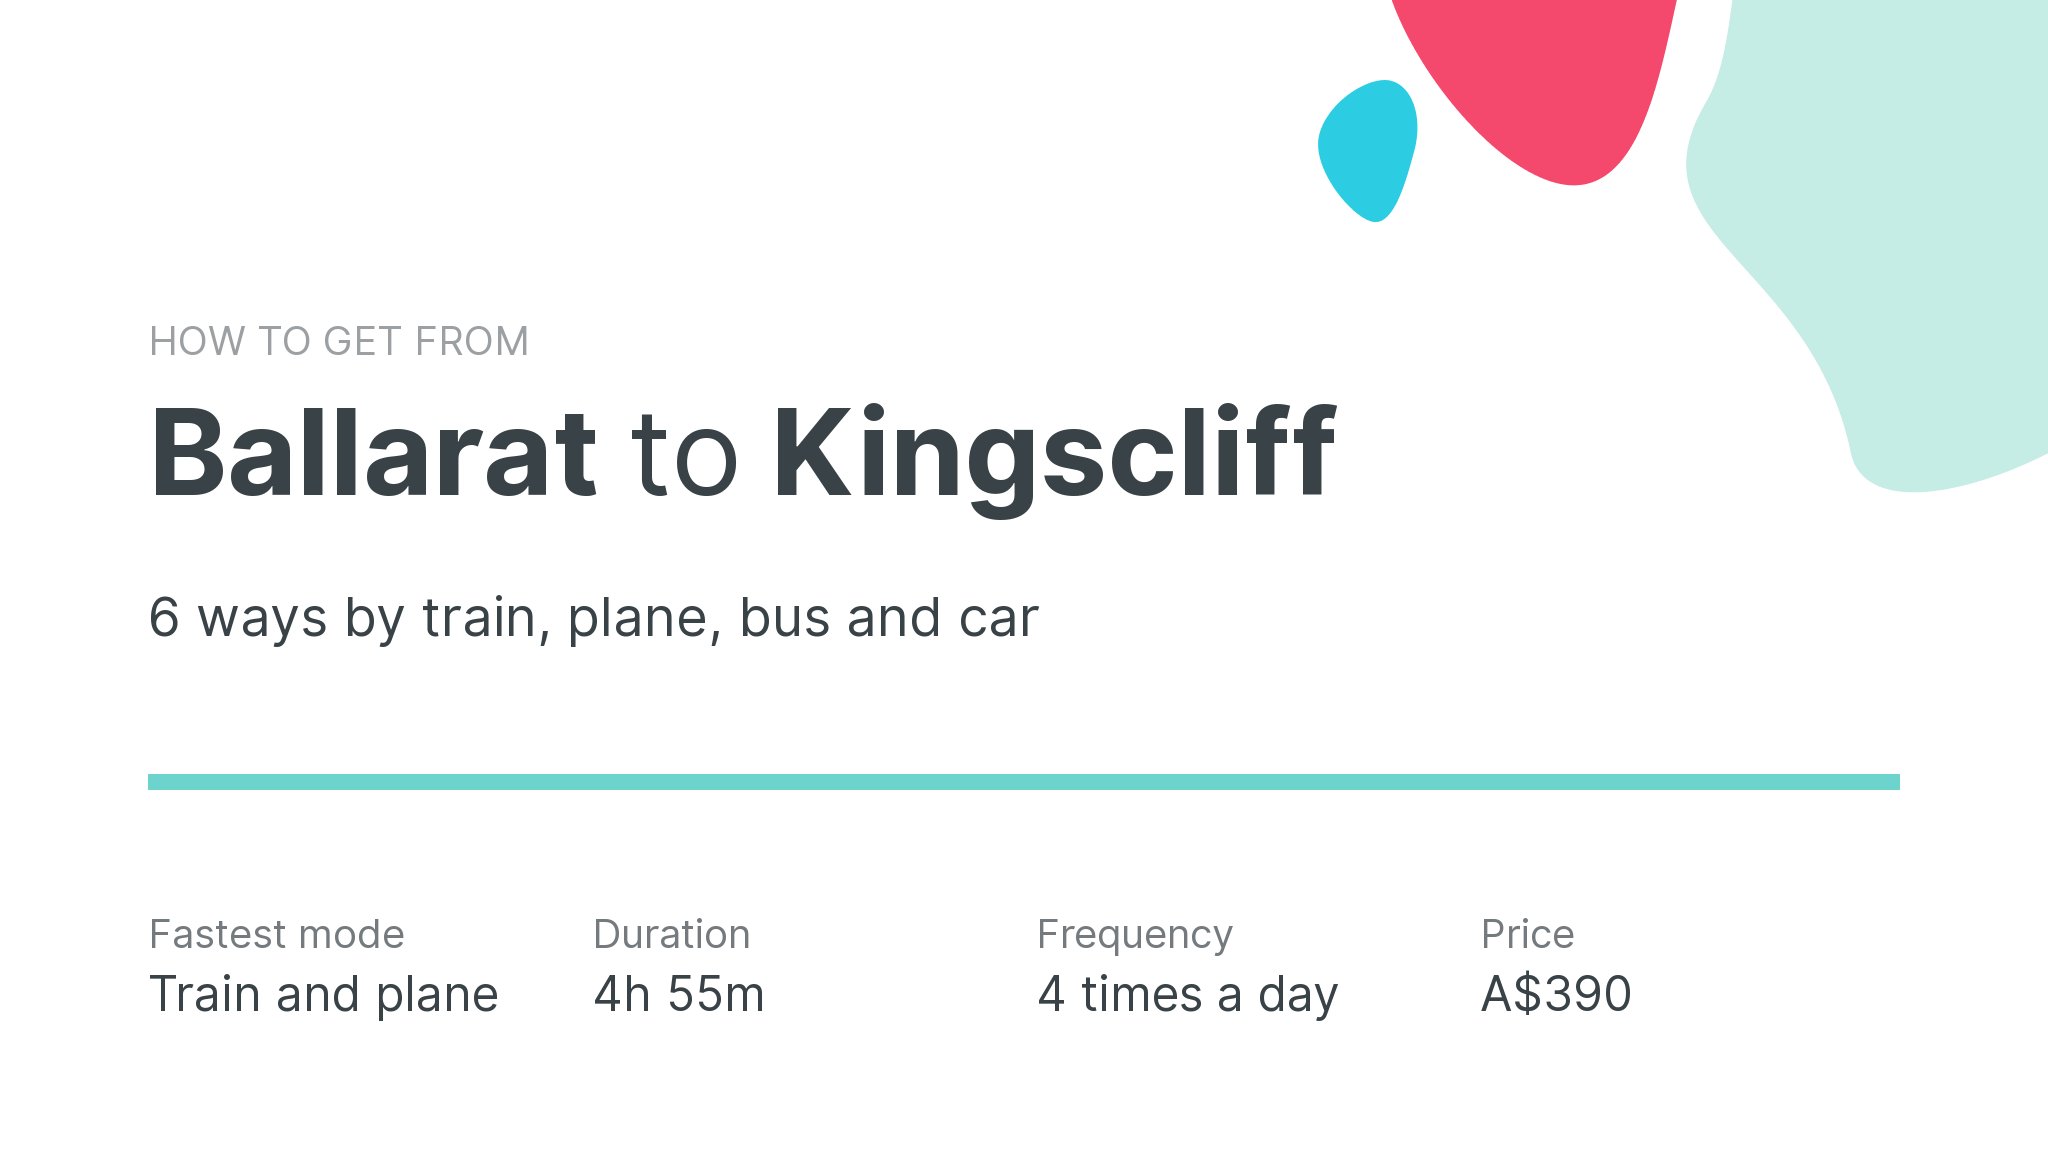 How do I get from Ballarat to Kingscliff